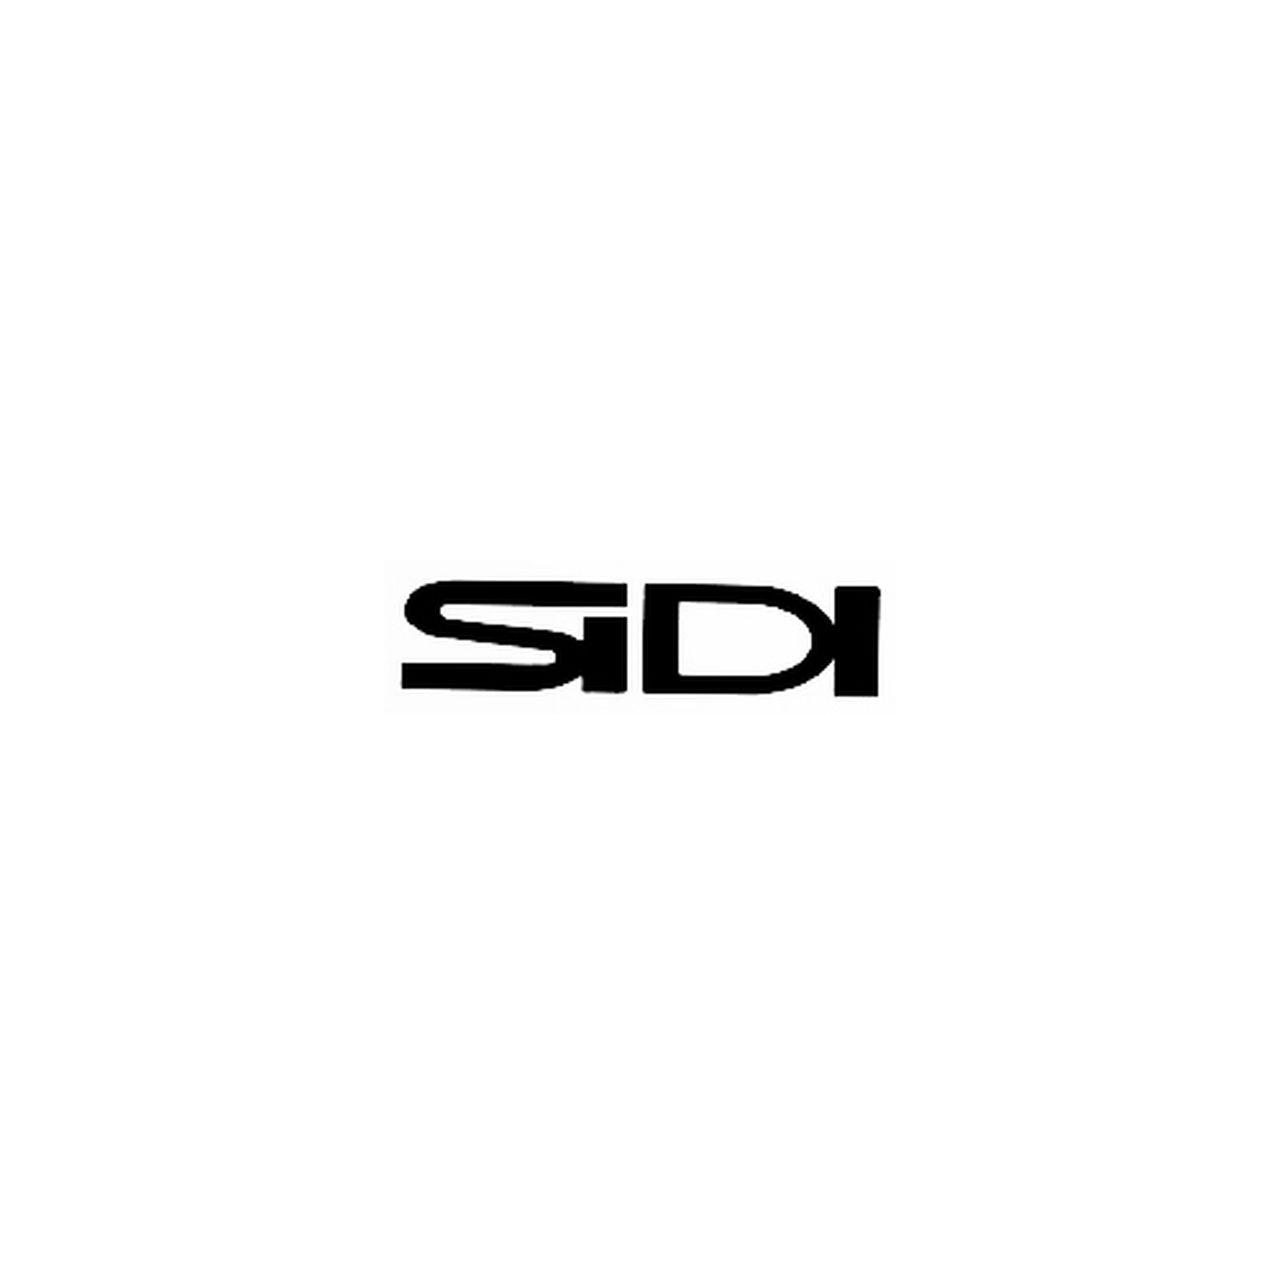 Sidi Logo - Sidi Text Logo Vinyl Decal